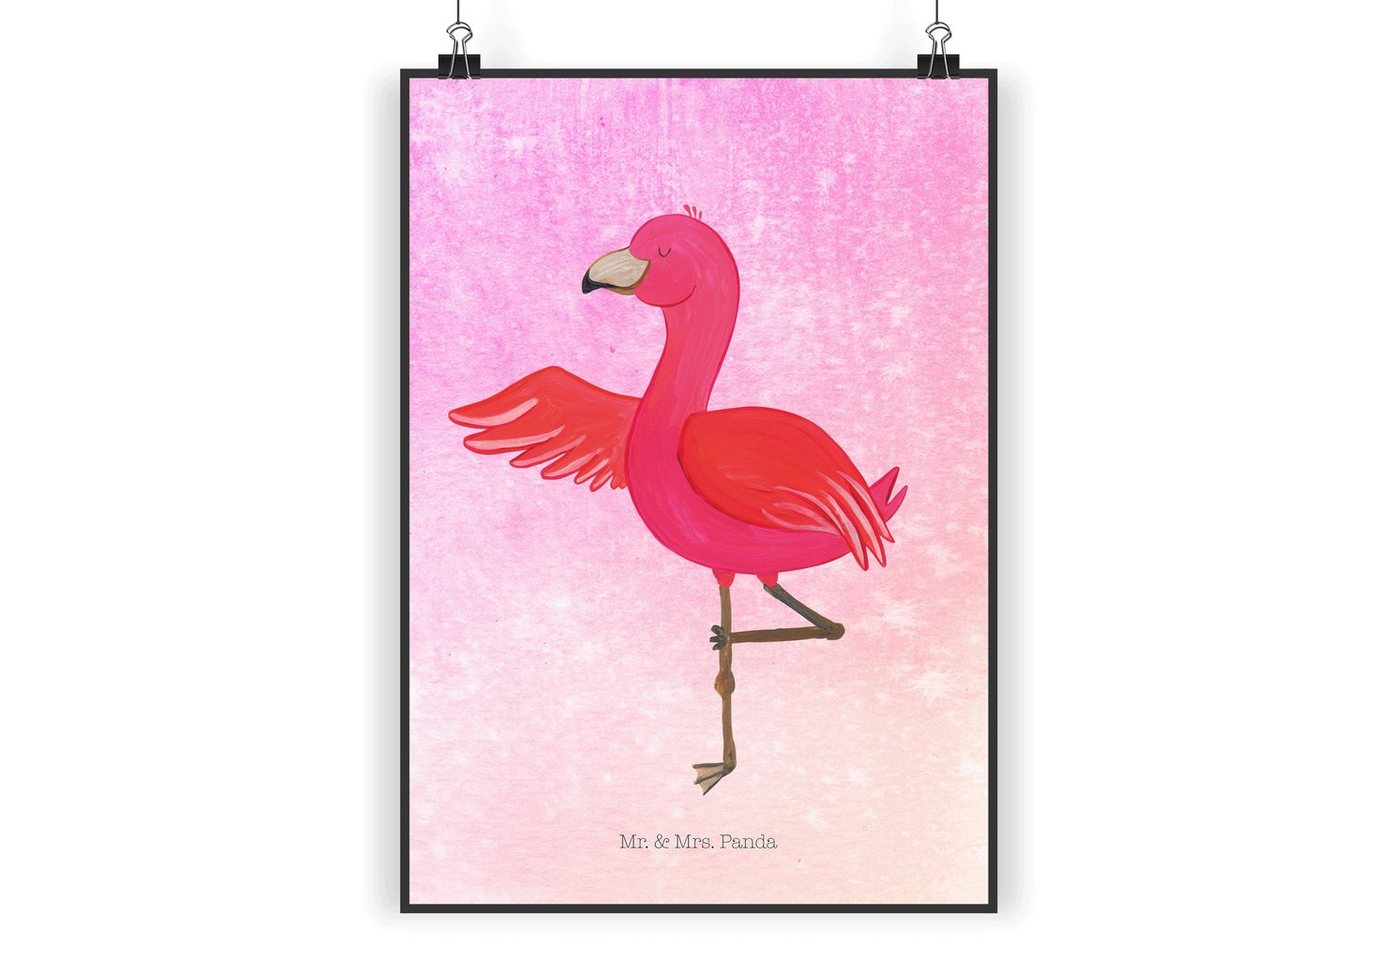 Mr. & Mrs. Panda Poster DIN A4 Flamingo Yoga - Aquarell Pink - Geschenk, Rosa, Entspannung, Y, Flamingo Yoga (1 St), Positive Botschaften von Mr. & Mrs. Panda